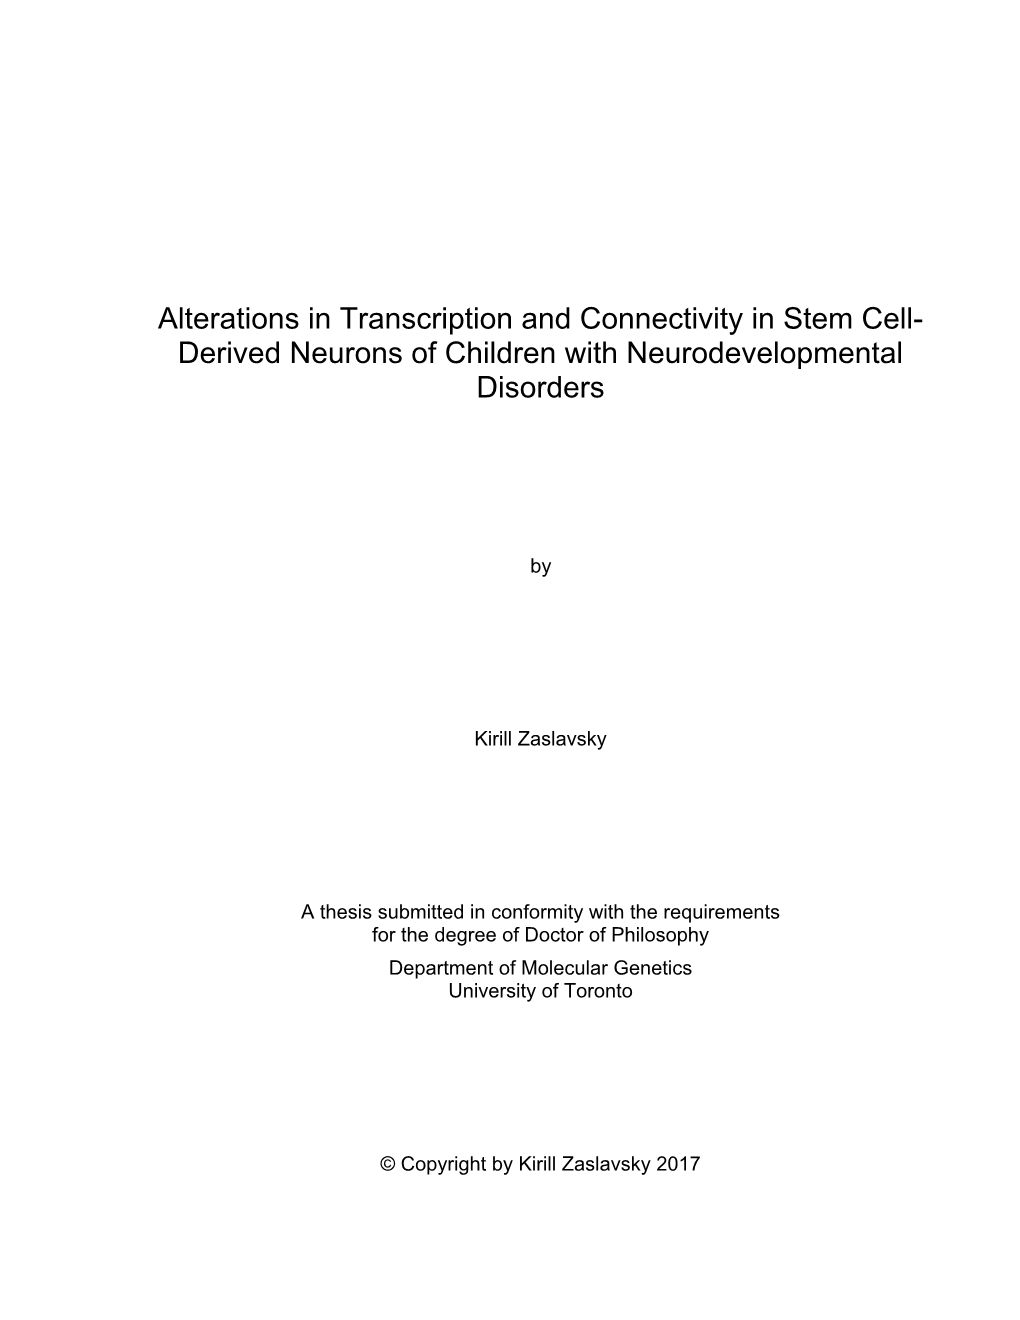 Derived Neurons of Children with Neurodevelopmental Disorders